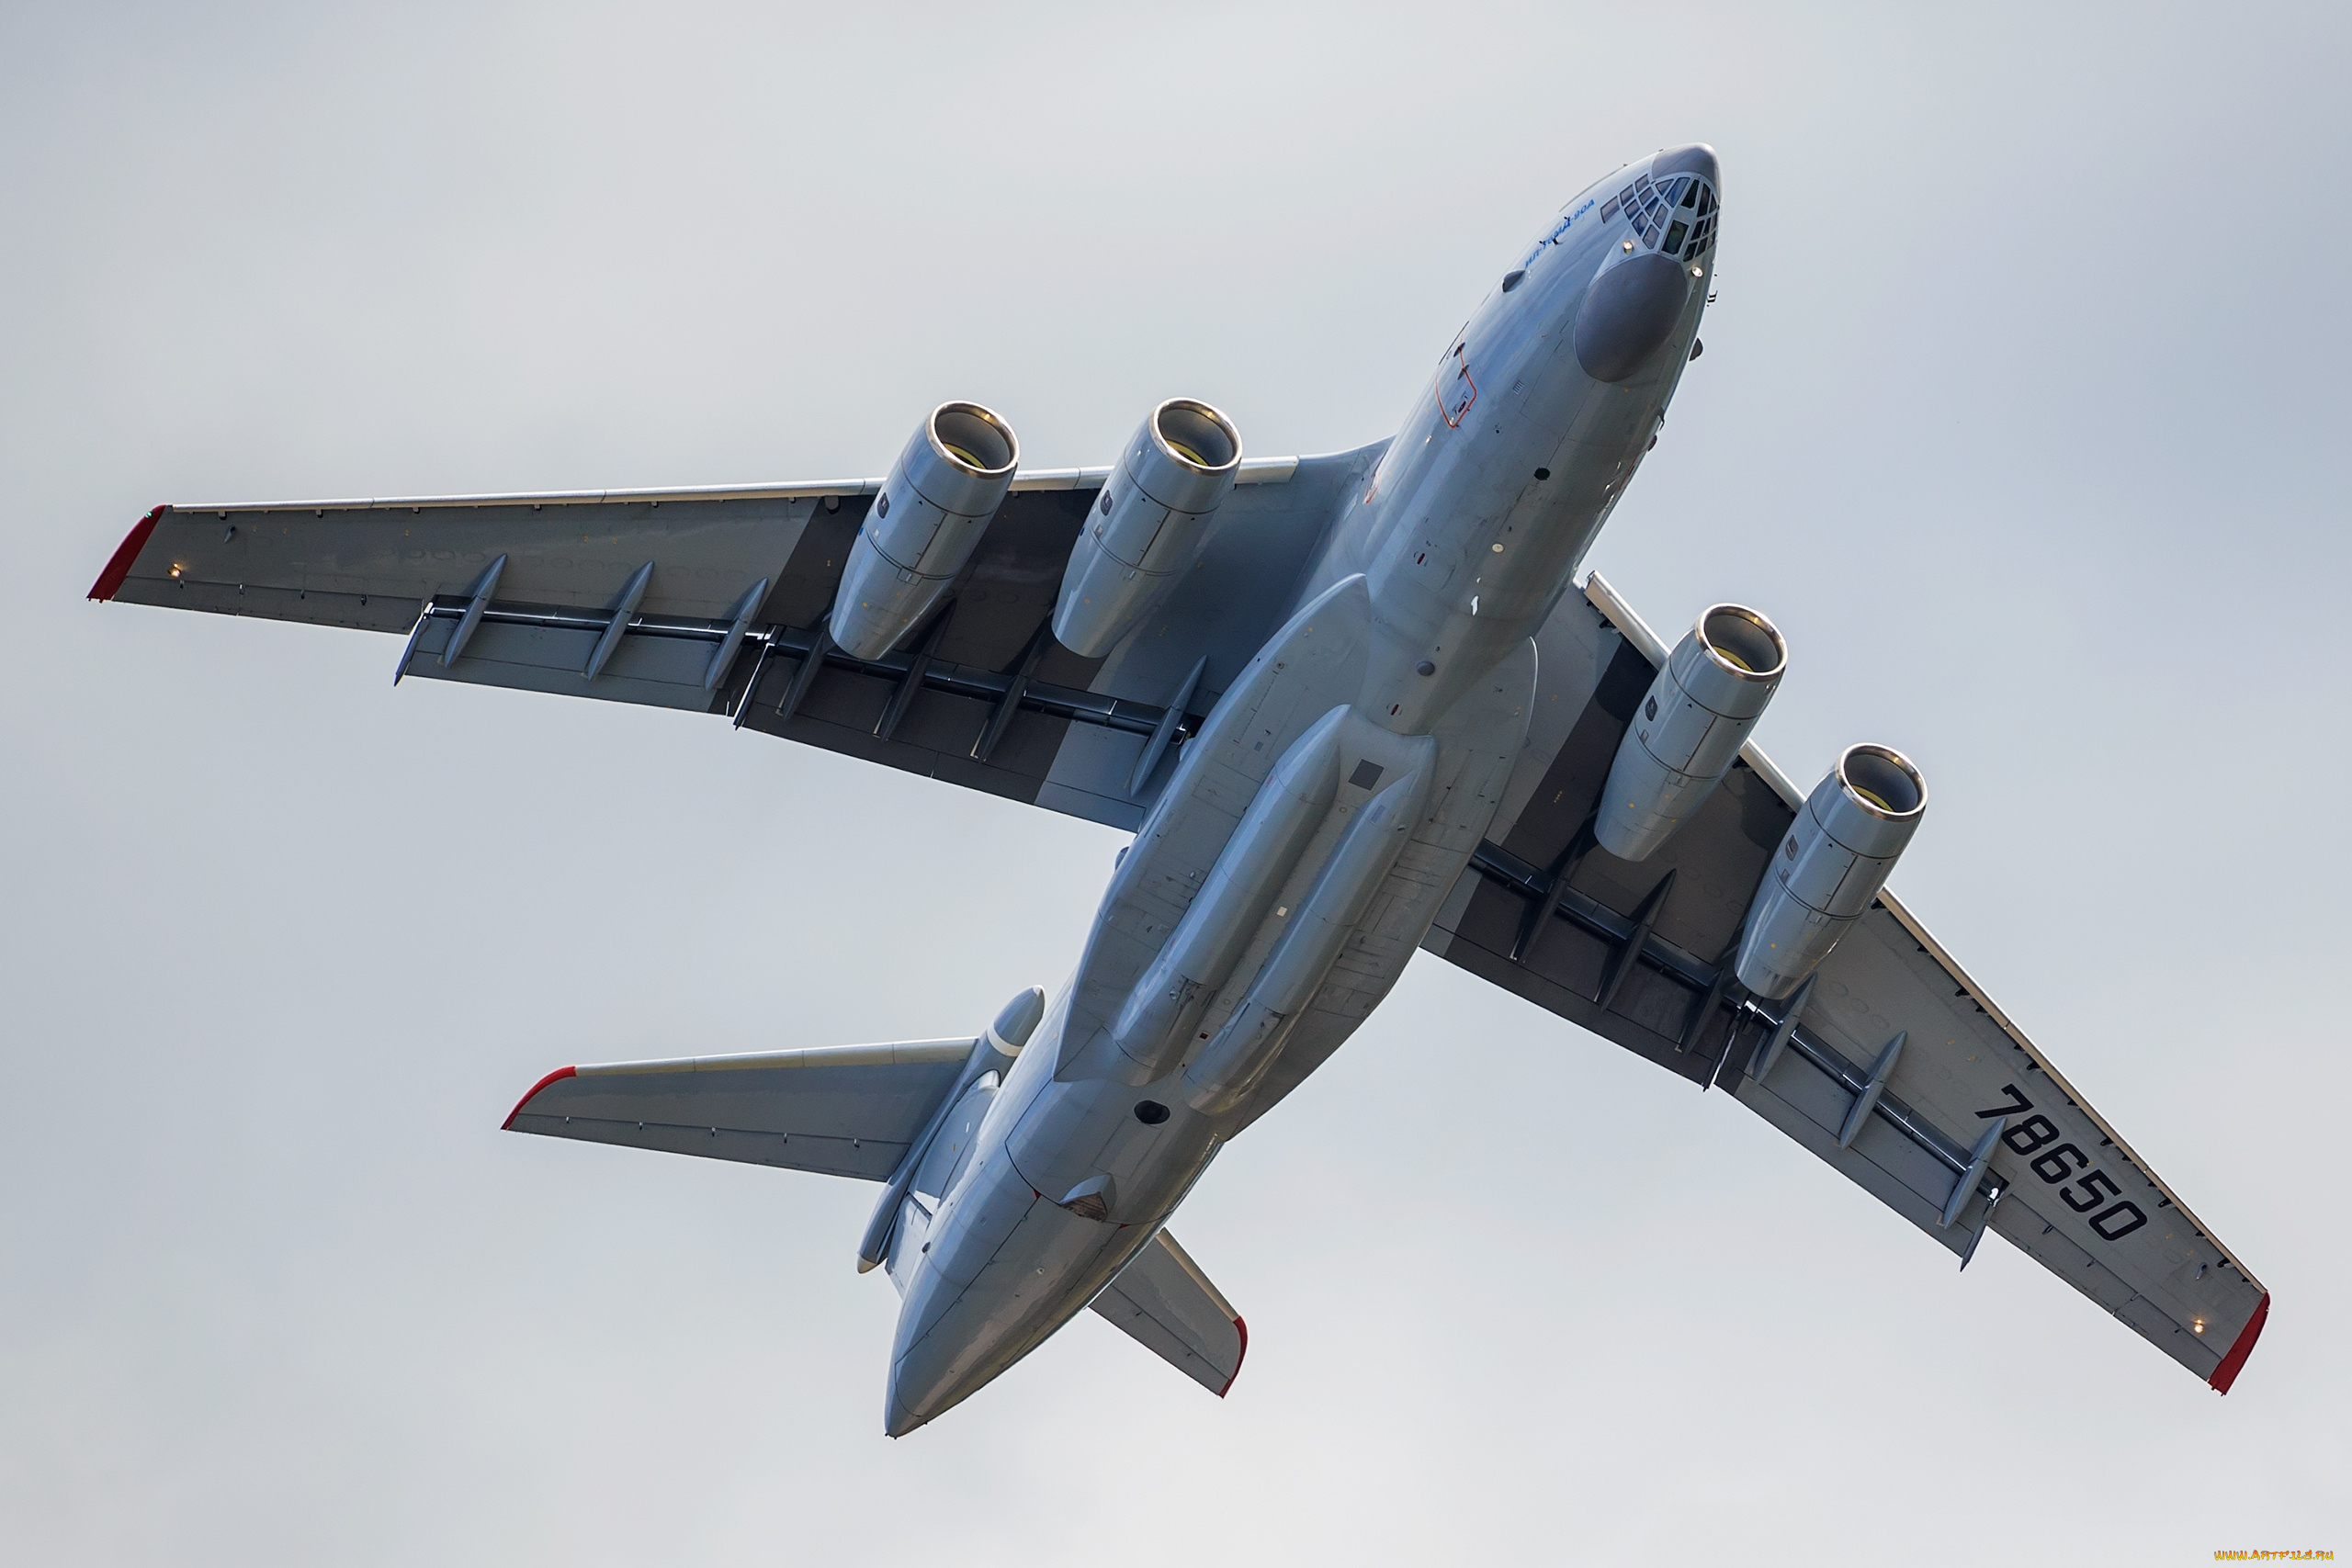 il-76md-90a, , il-476, авиация, военно-транспортные, самолёты, военный, транспорт